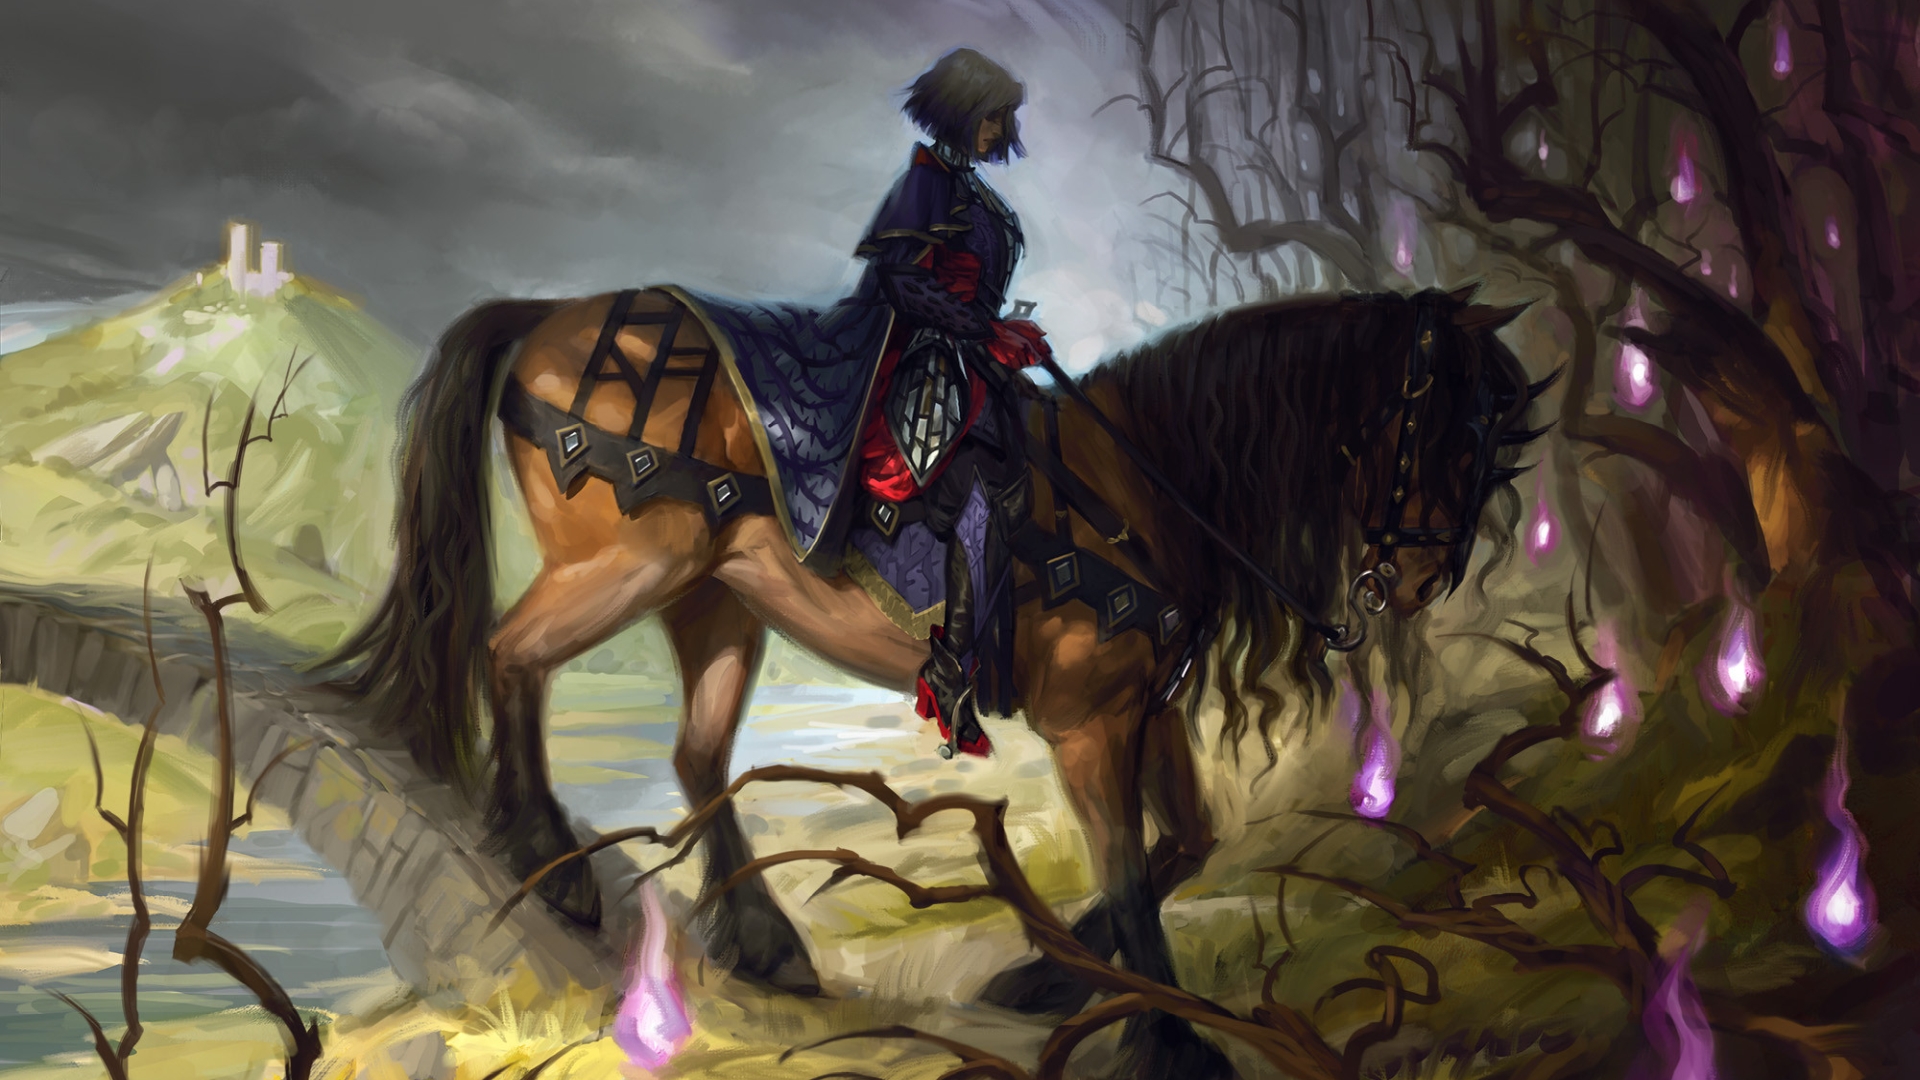 A horseback rider enters a dark forest